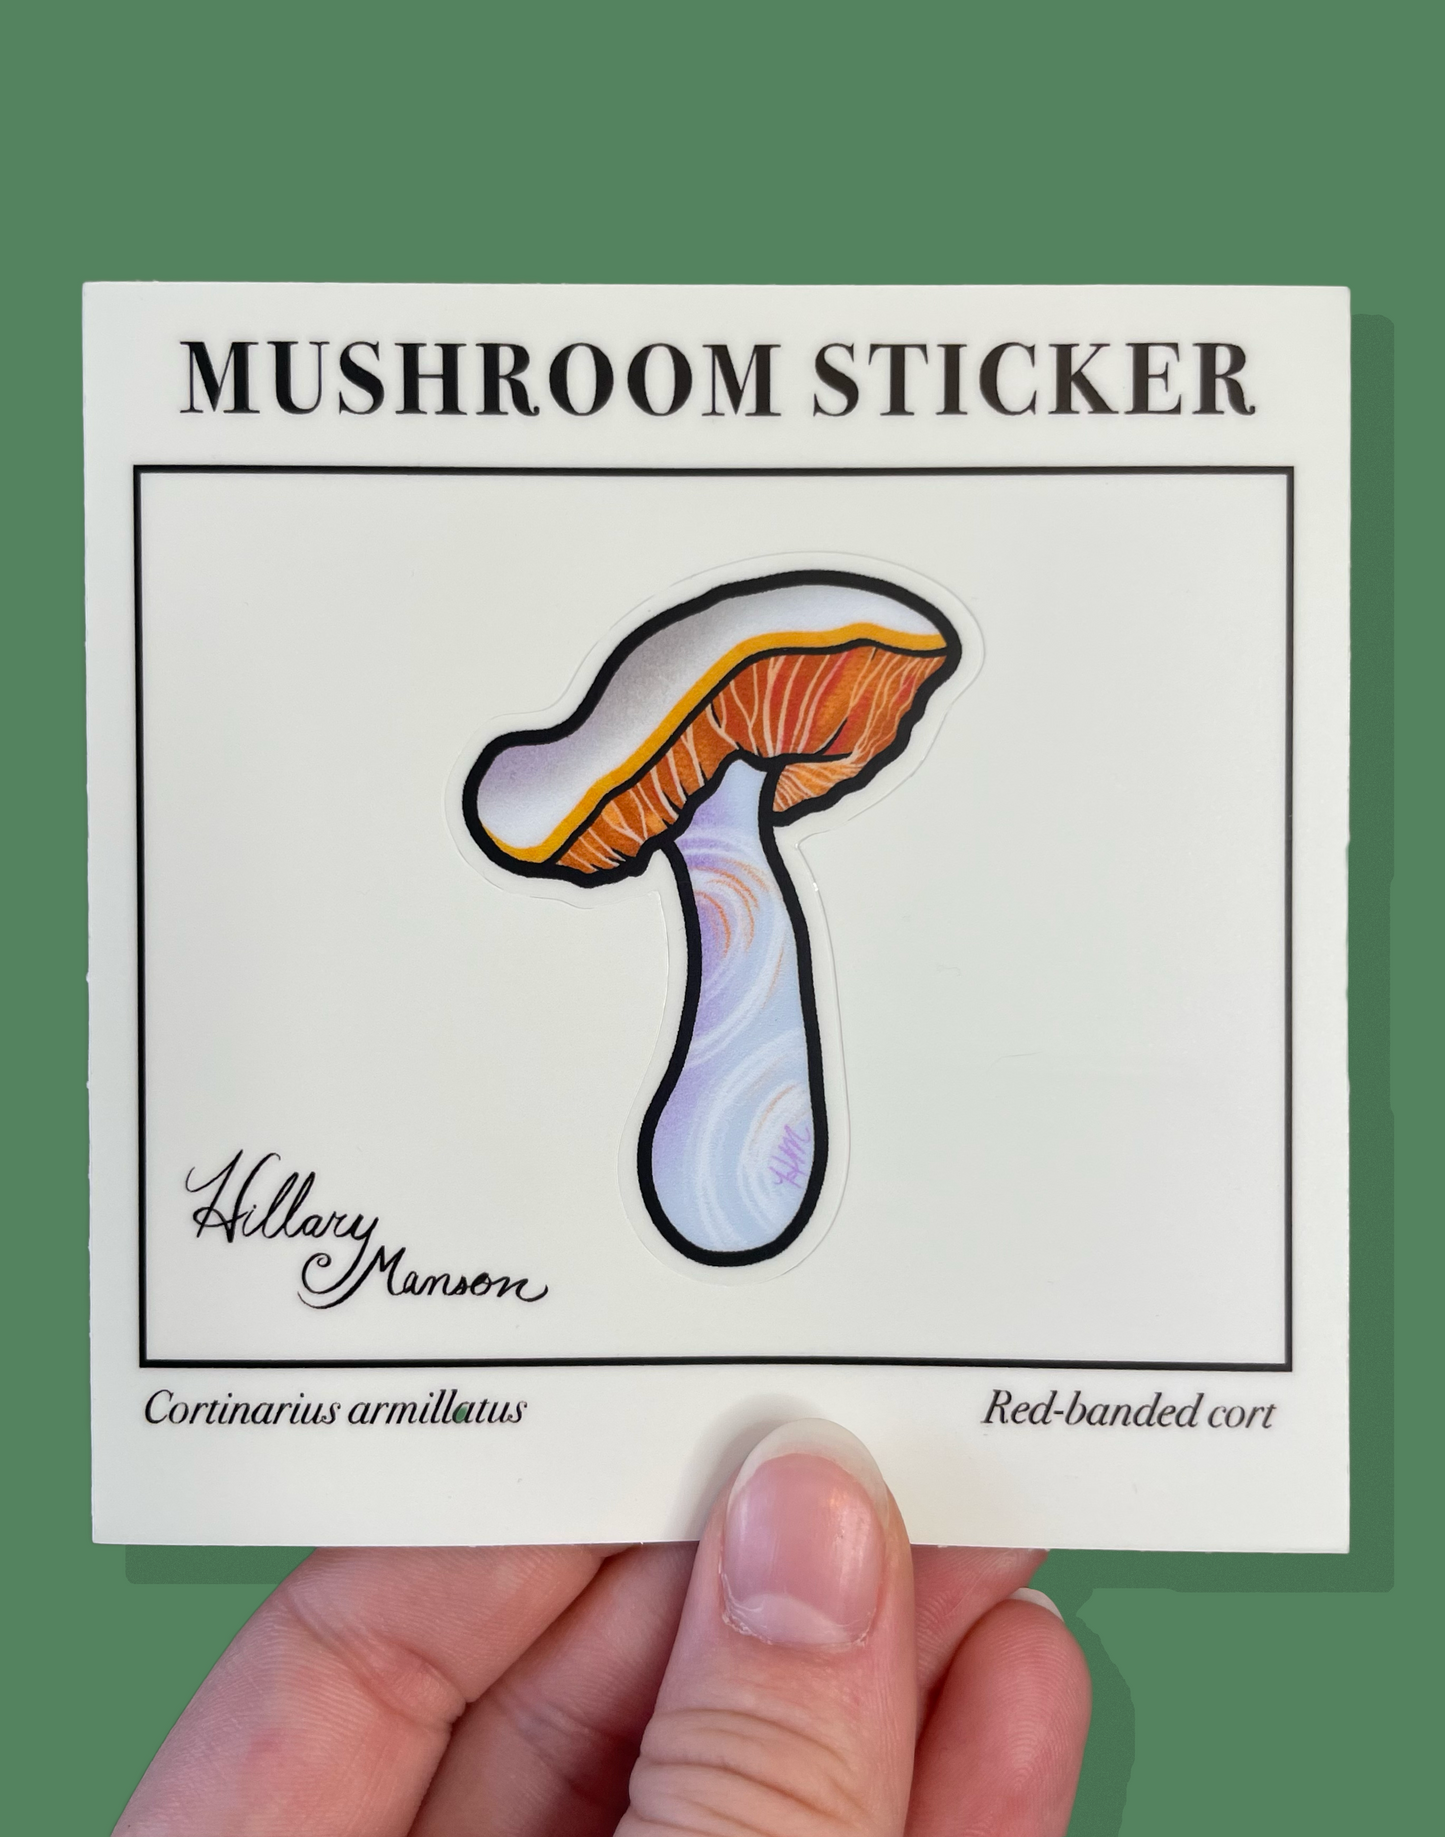 Red-Banded Cort Mushroom Sticker